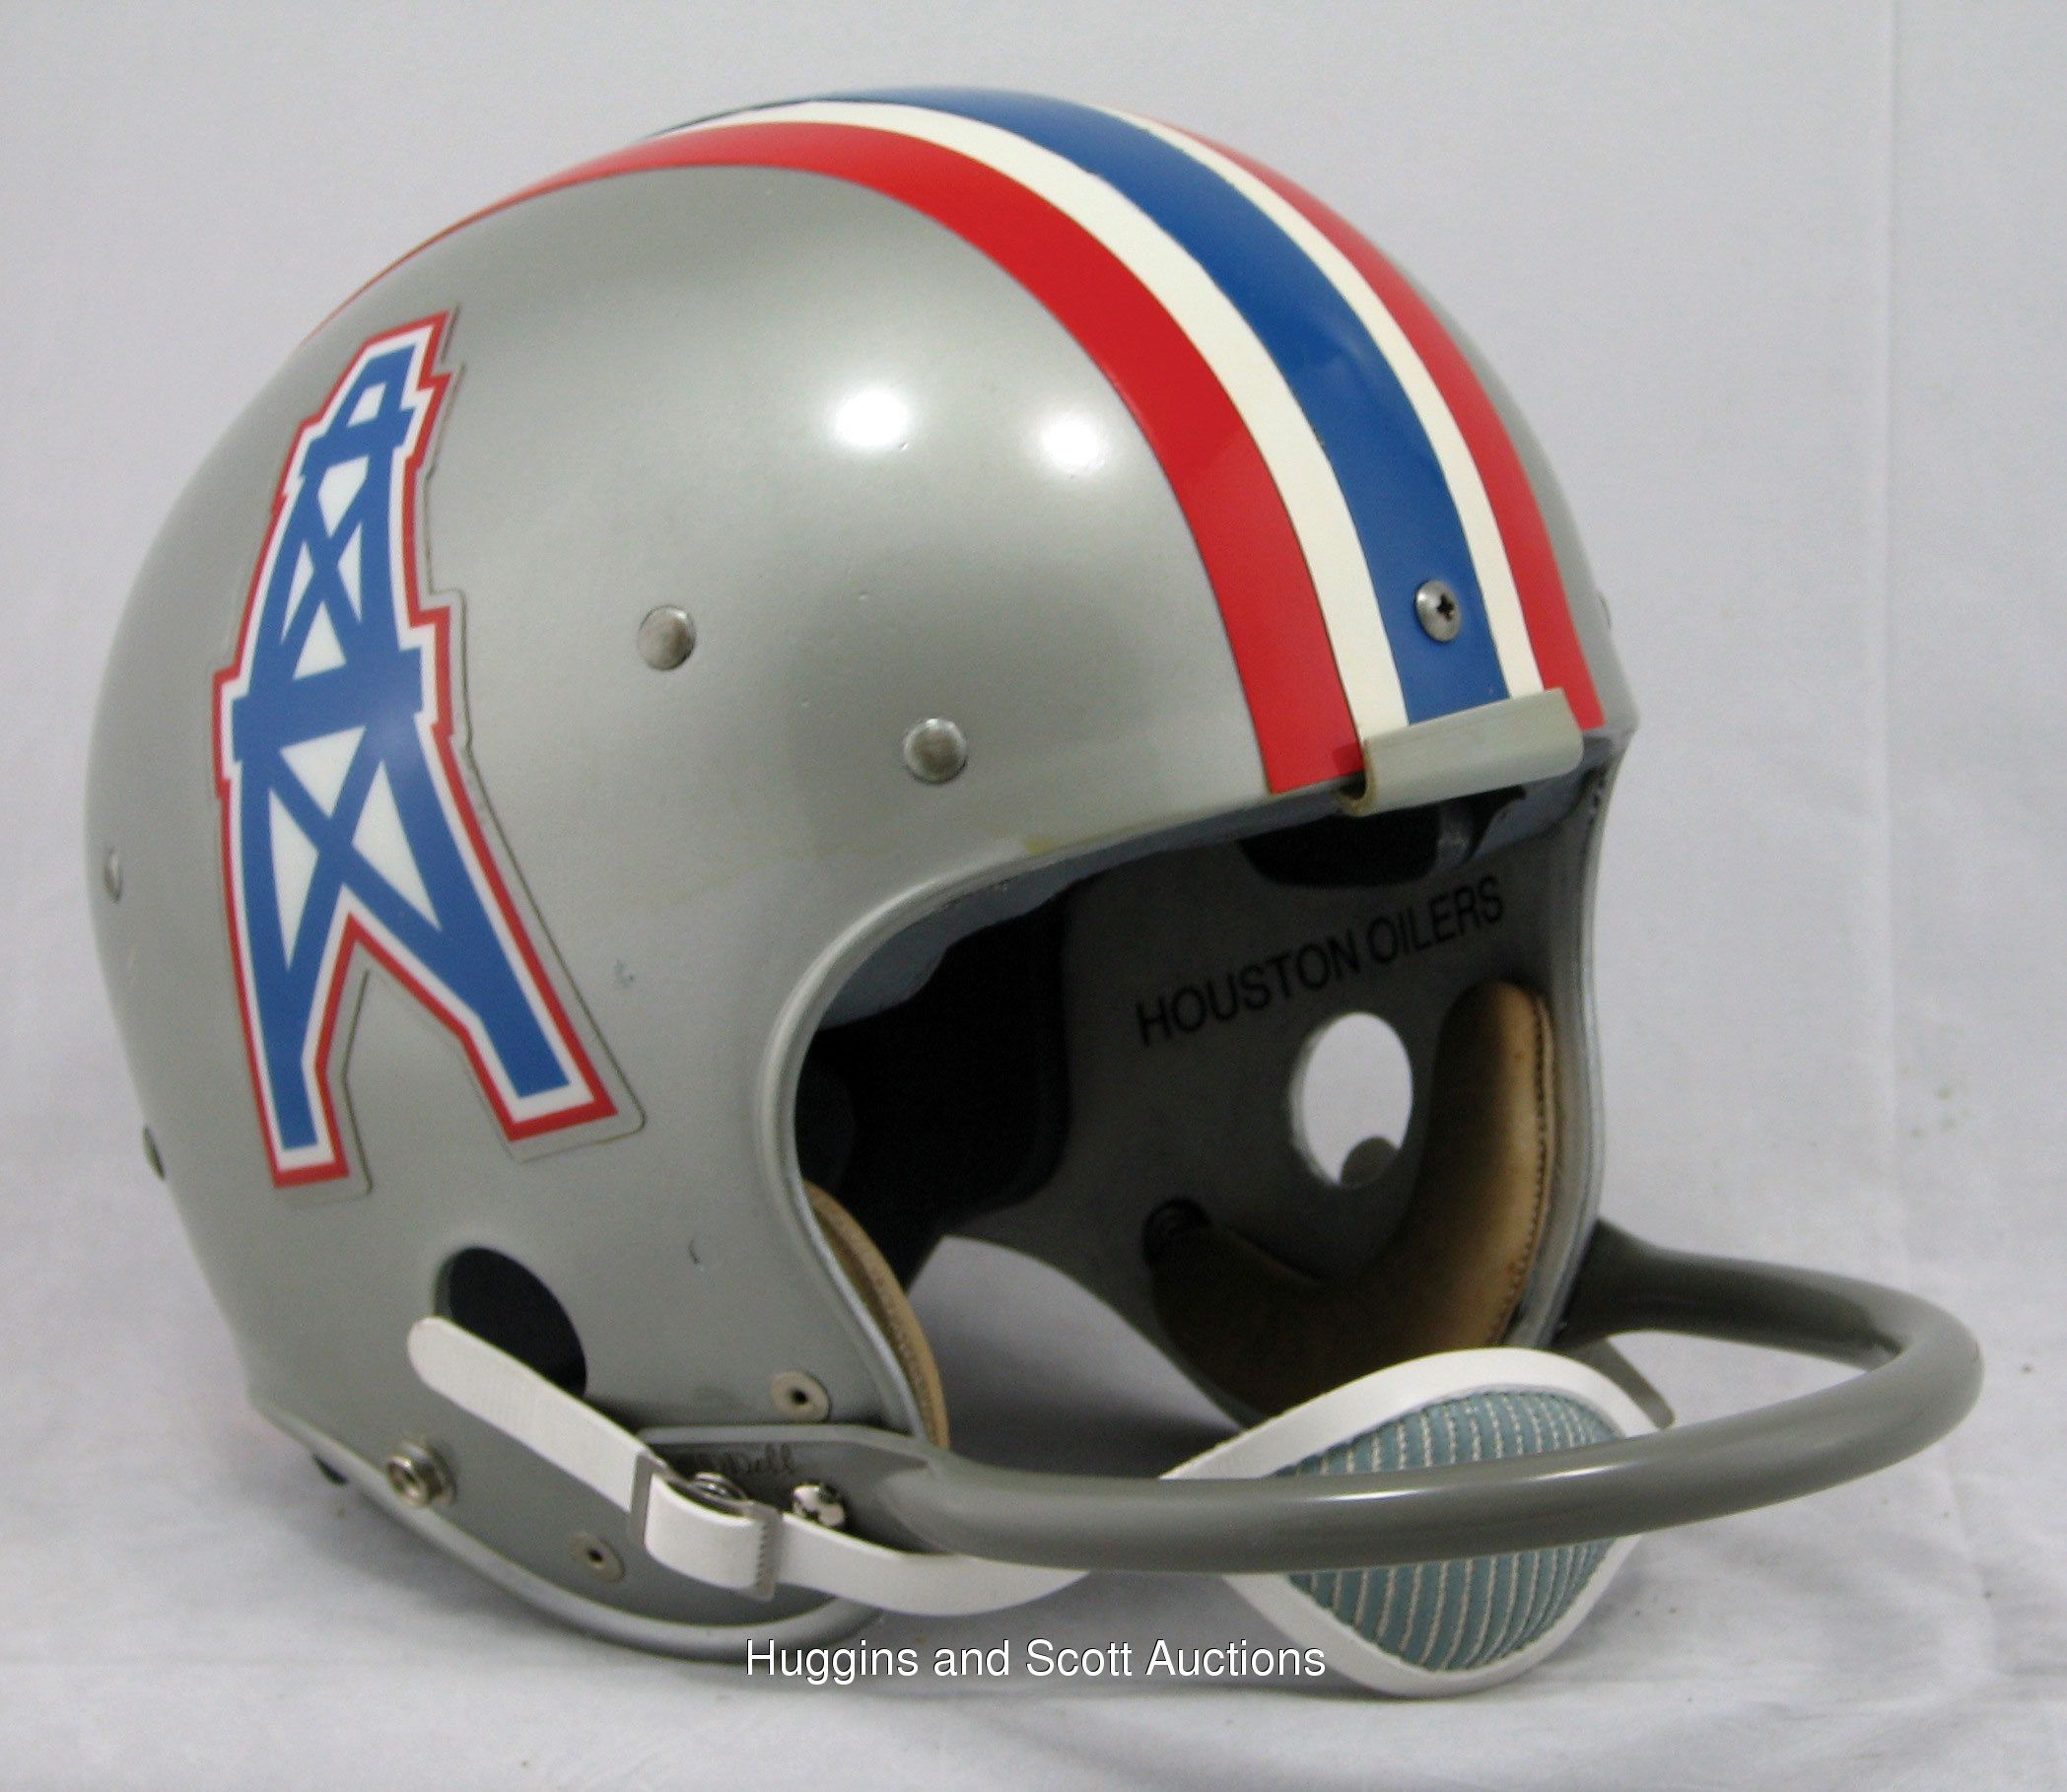 houston oilers helmets - Houston Oilers Huggins and Scott Auctions